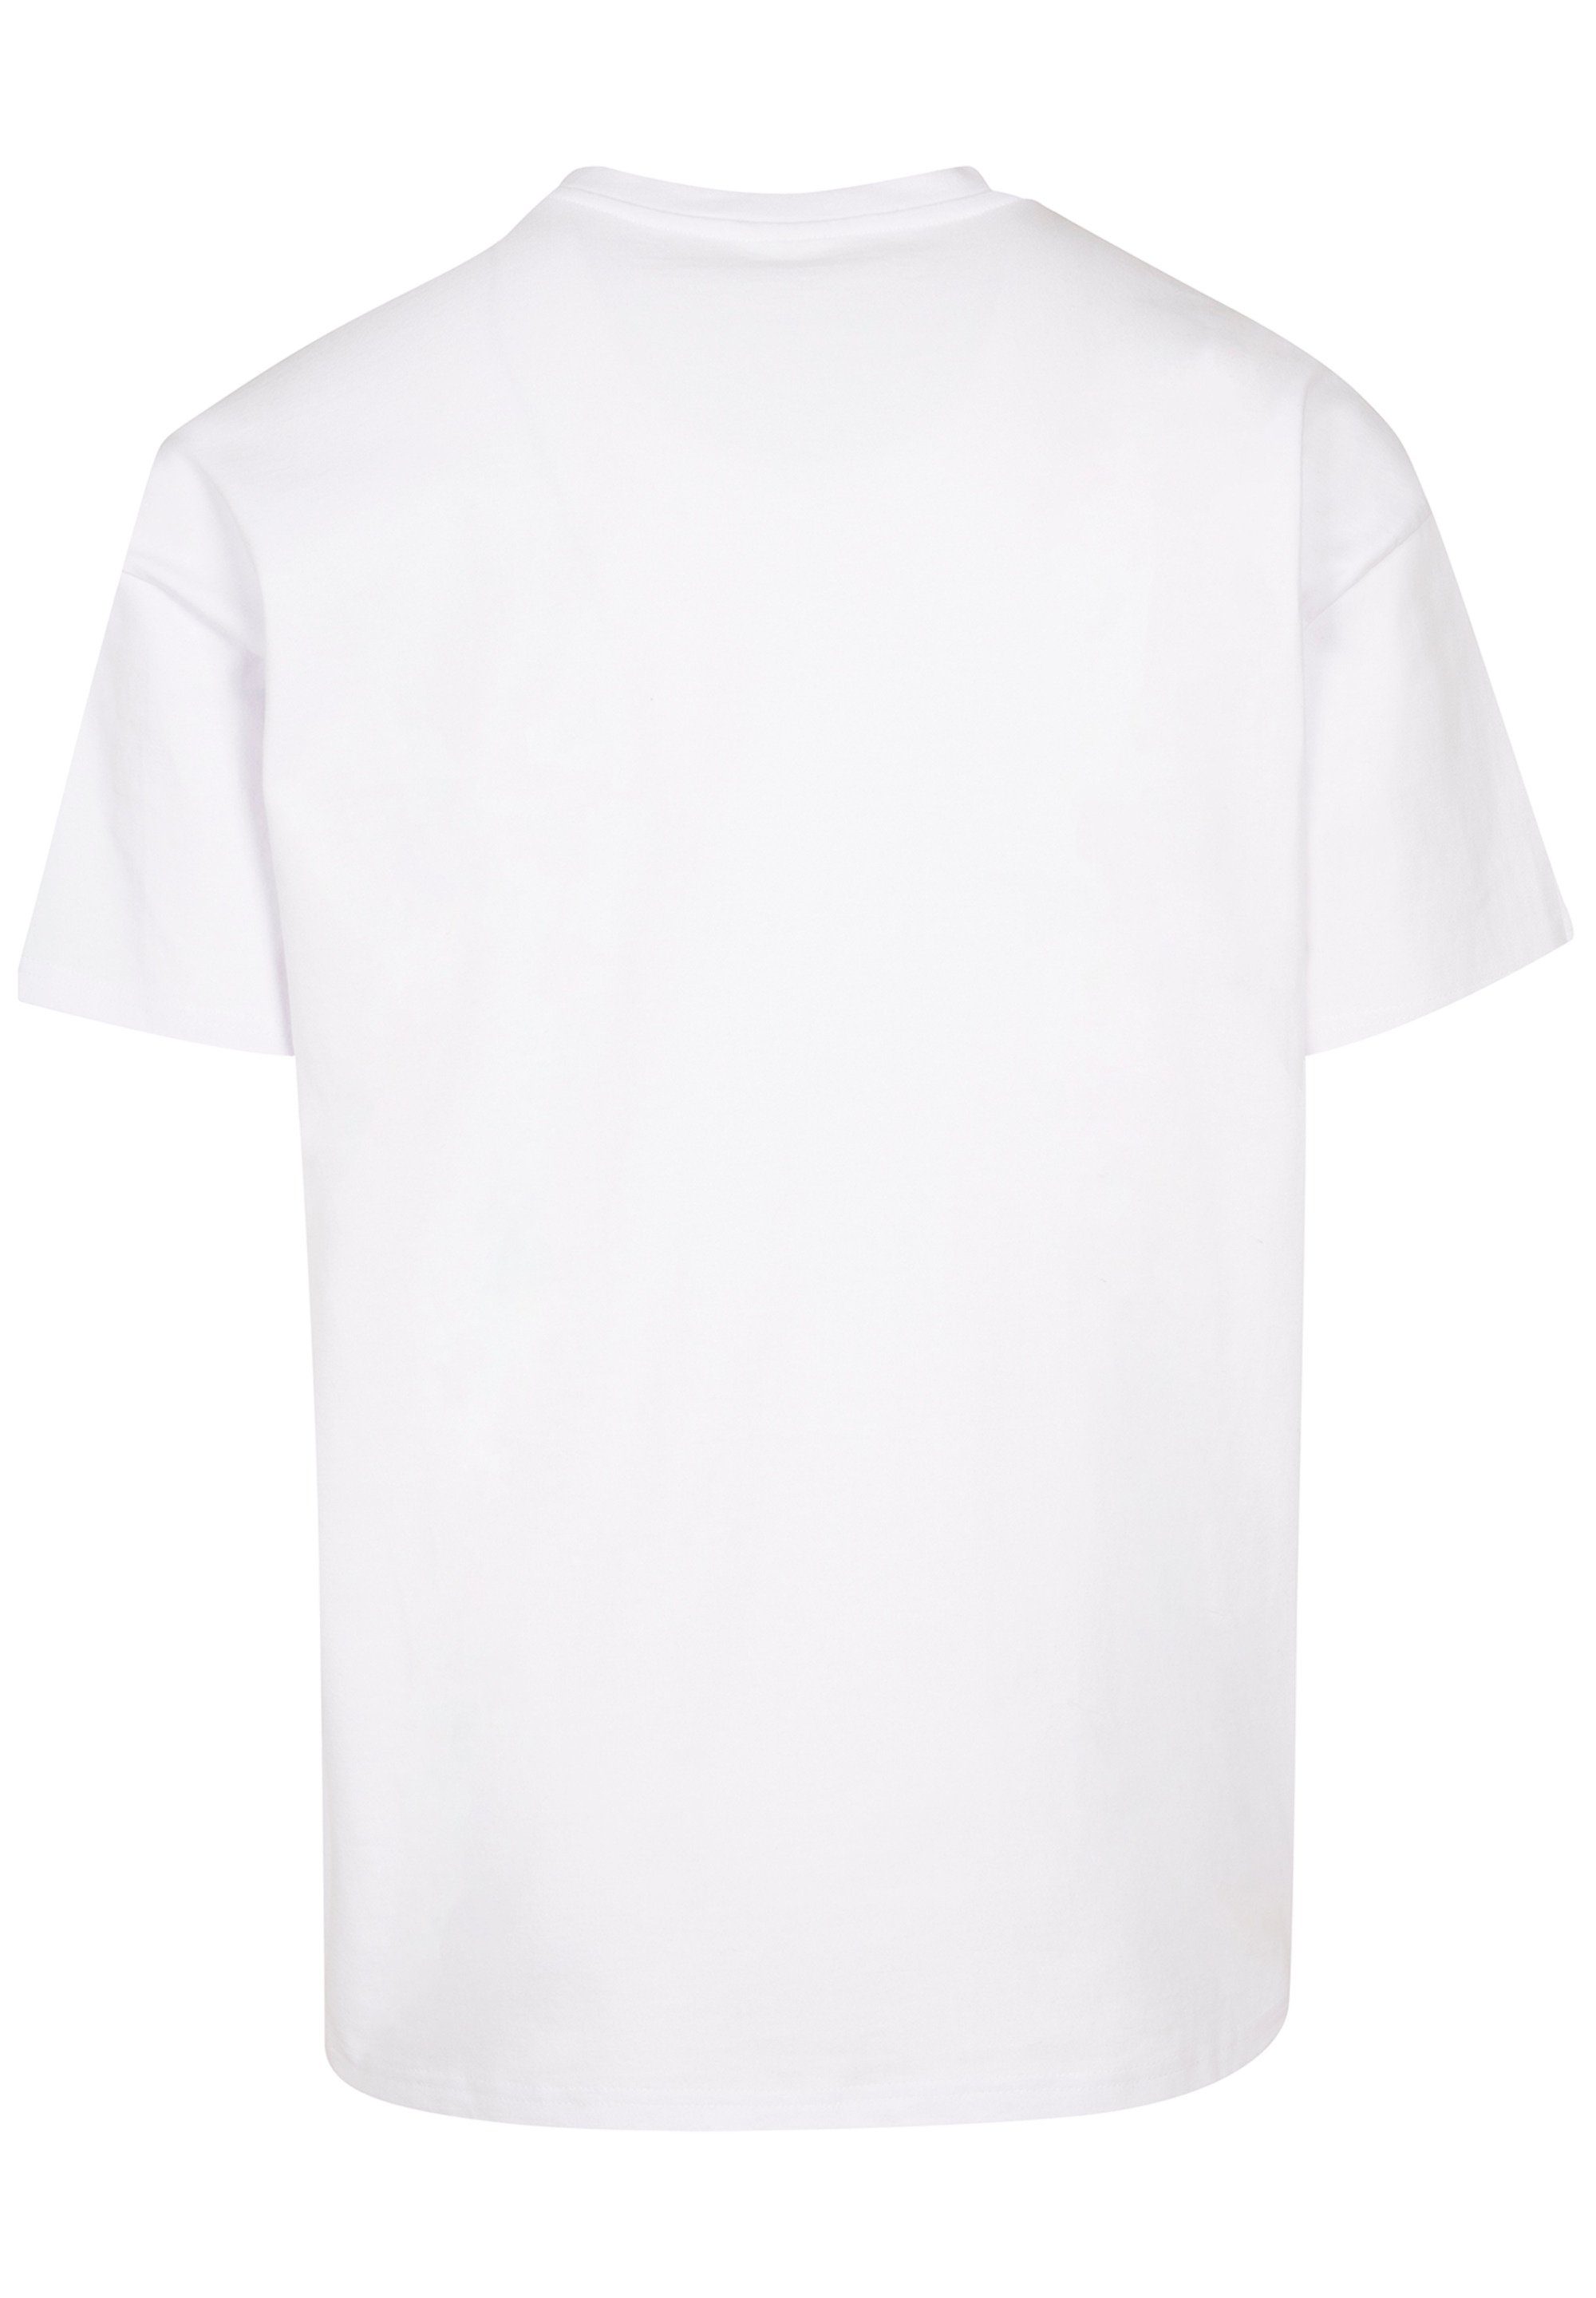 T-Shirt Print F4NT4STIC Darts Dartscheibe Board weiß